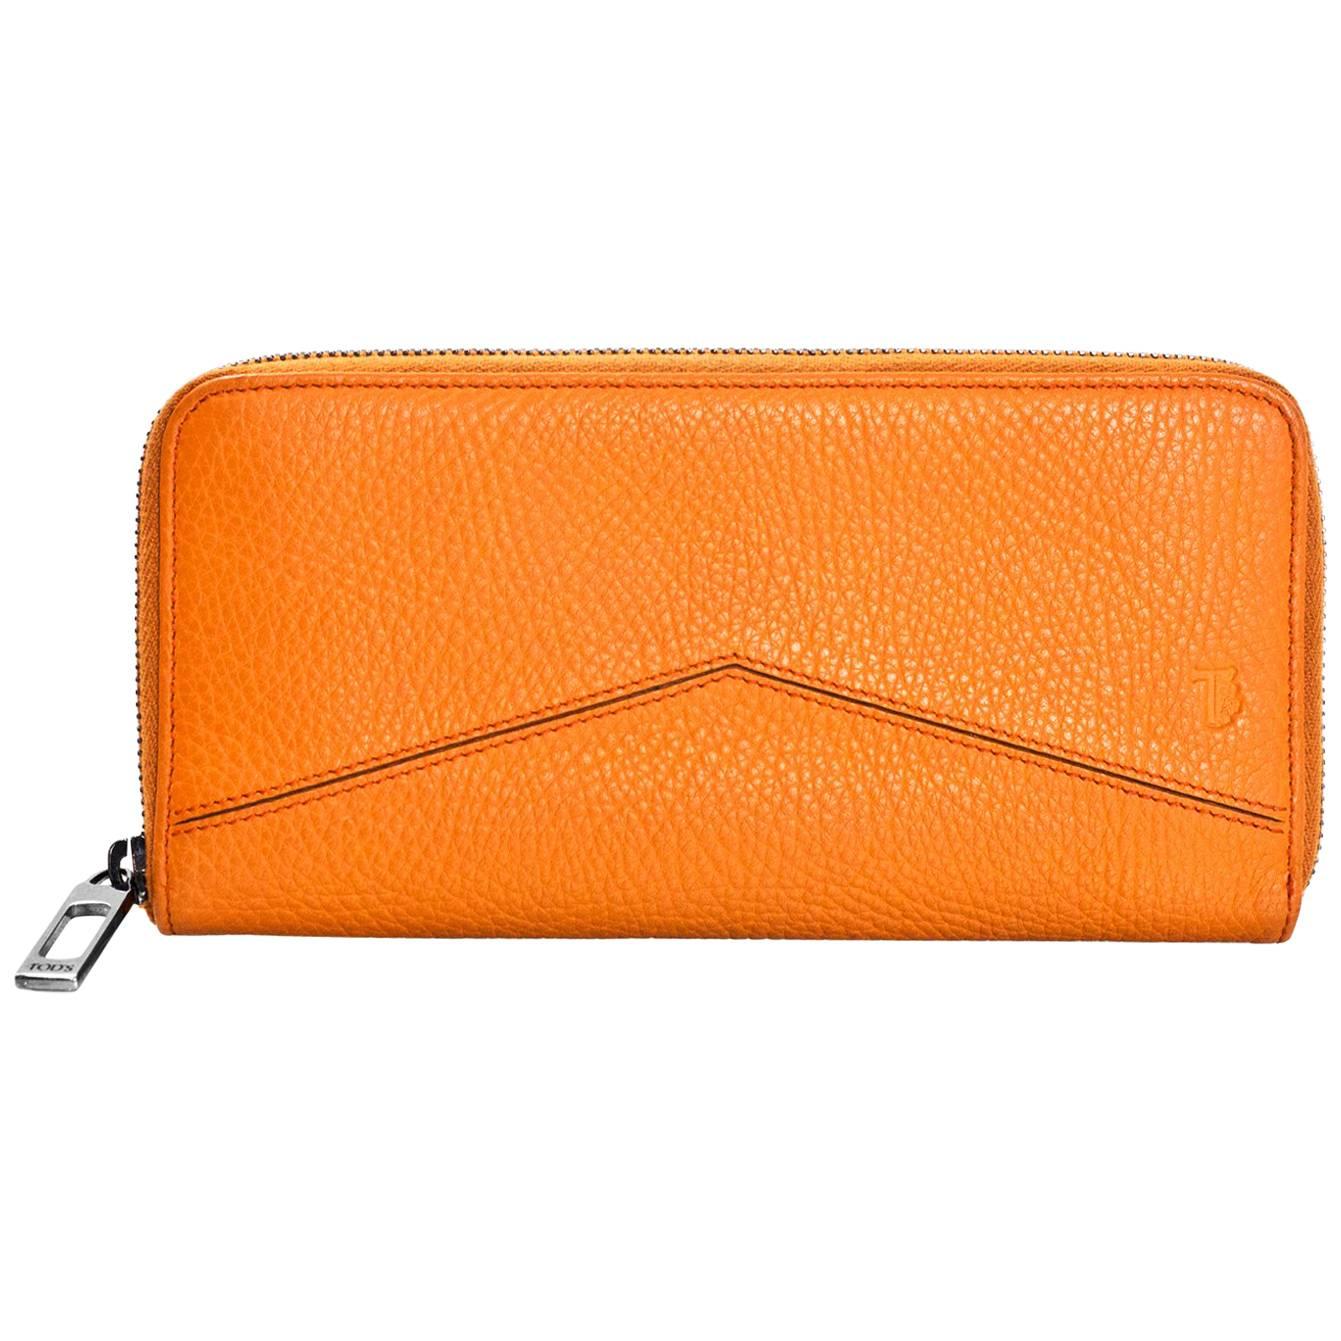 Tod's Orange Leather Zip Around Wallet with Box